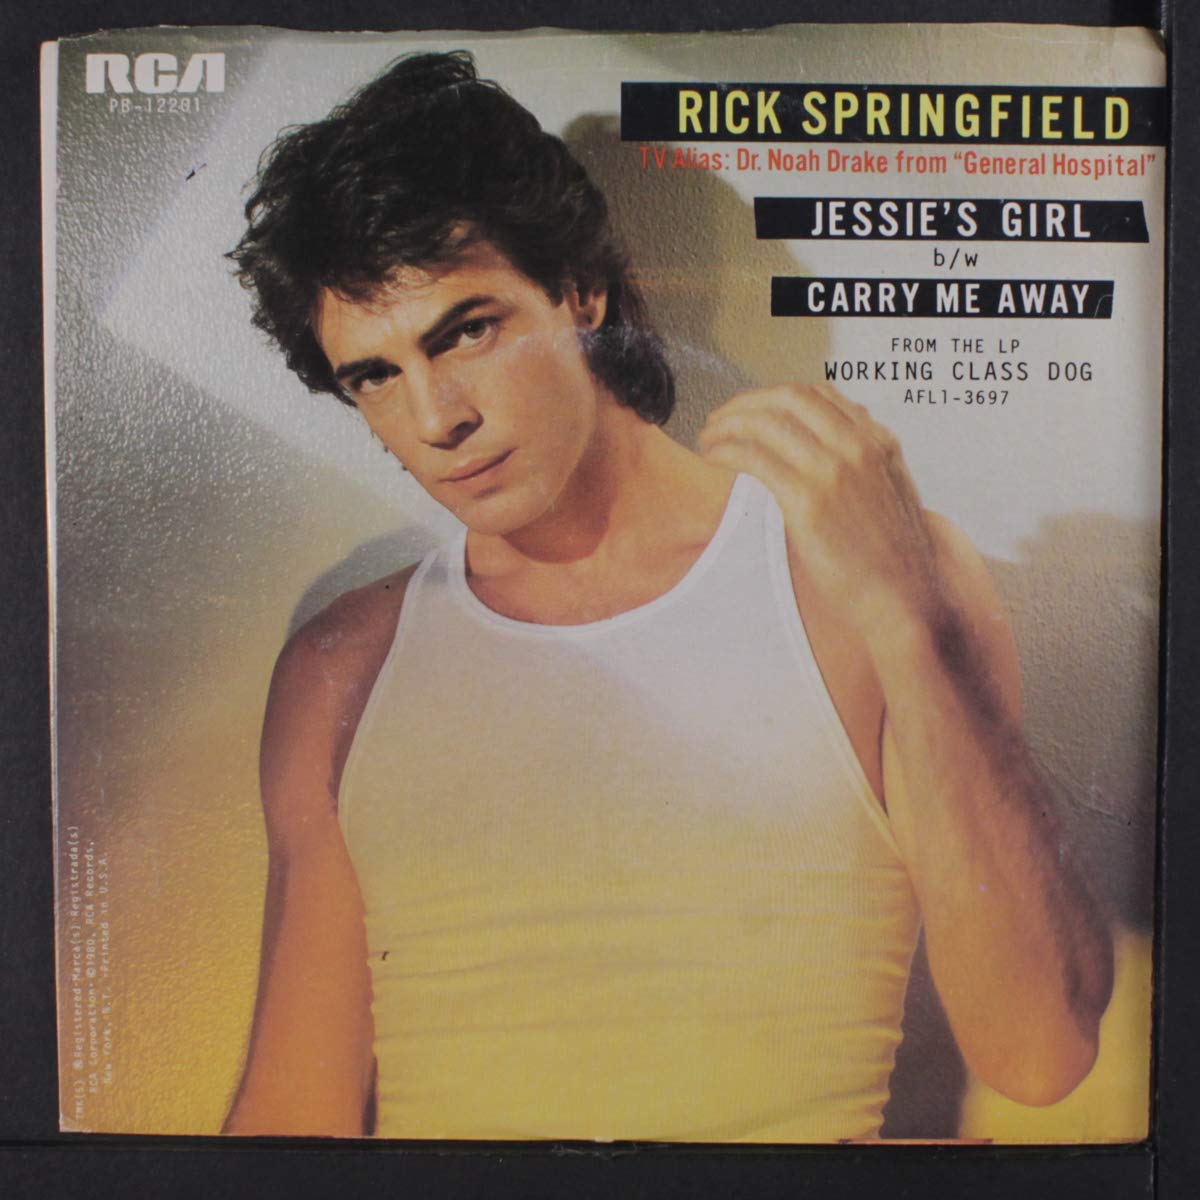 Rick Springfield "Jessie's Girl" single cover